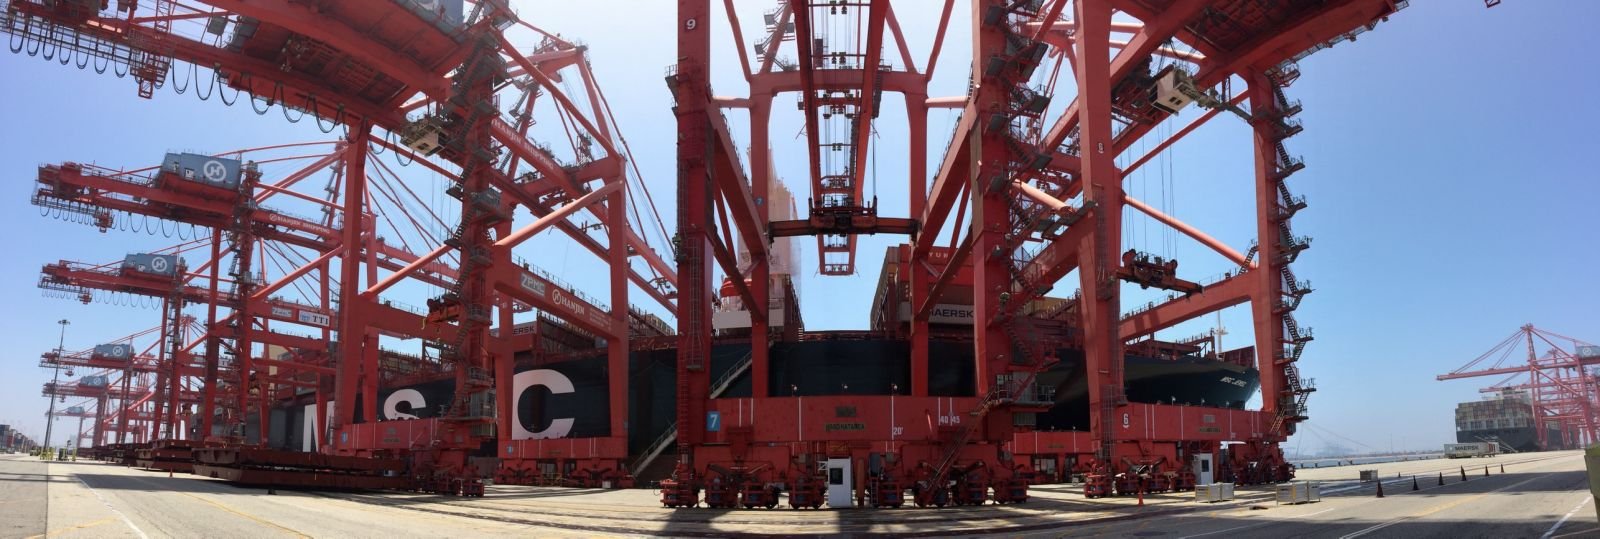 Cranes at the Port of LA Long Beach alongside a ship